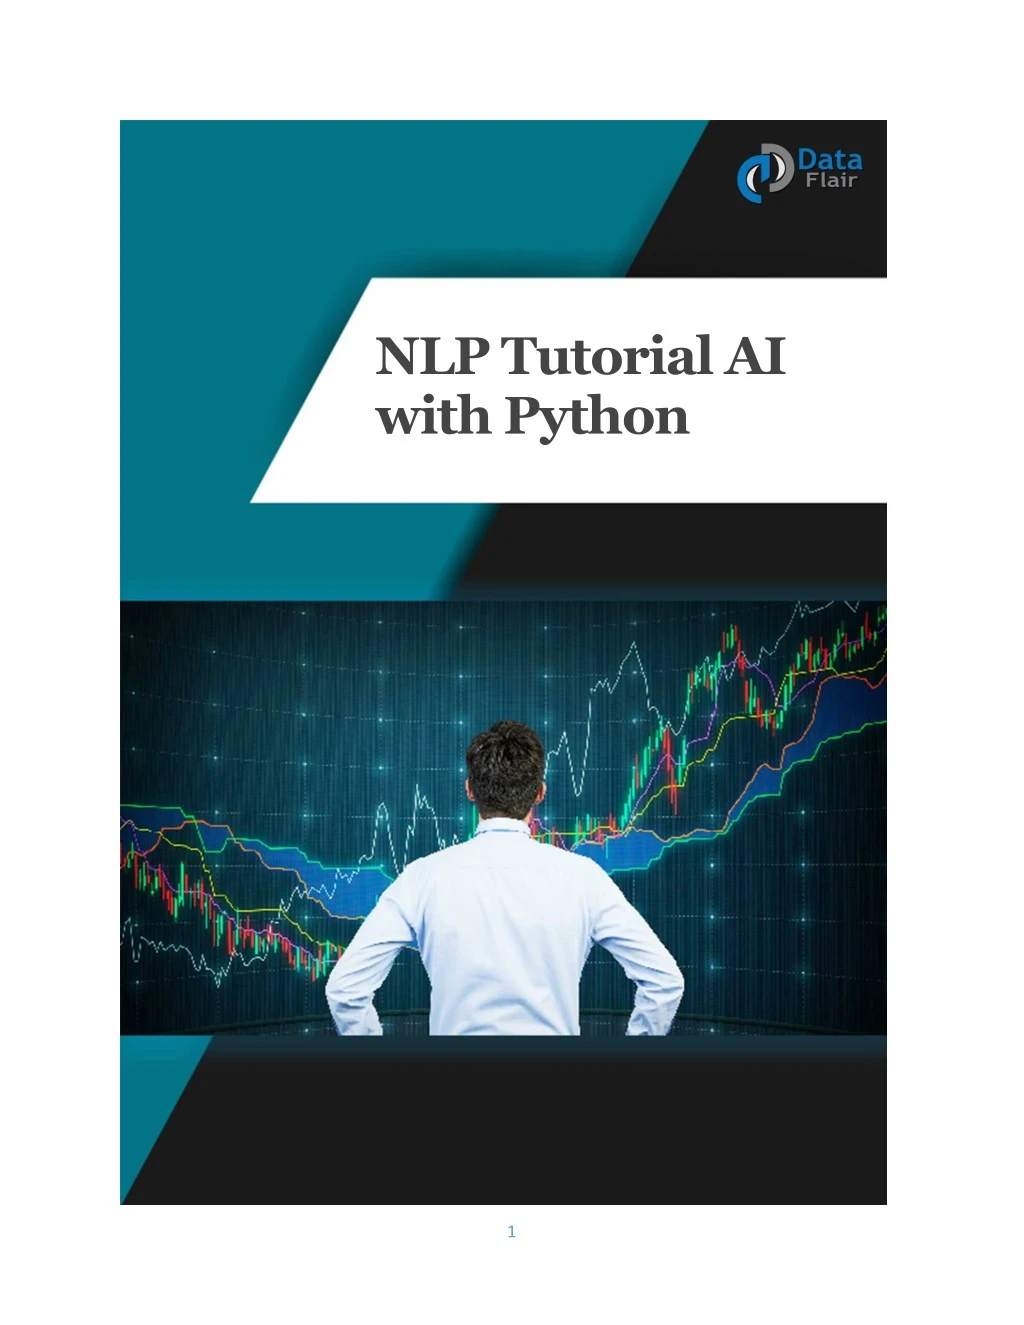 nlp tutorial ai with python